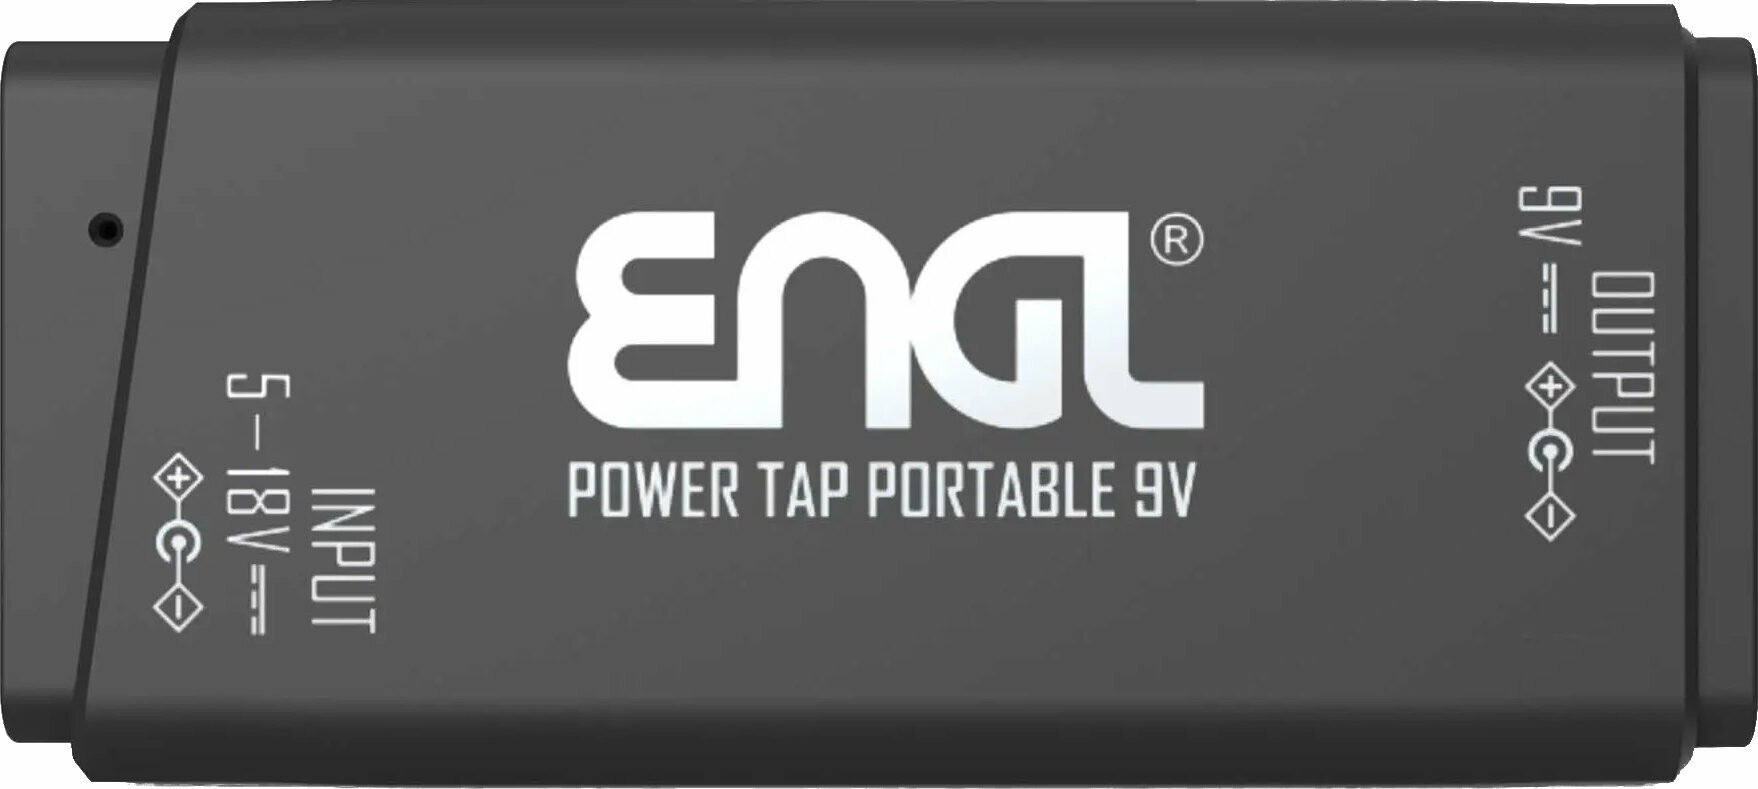 Zasilacz Engl Power Tap Portable / USB to 9V